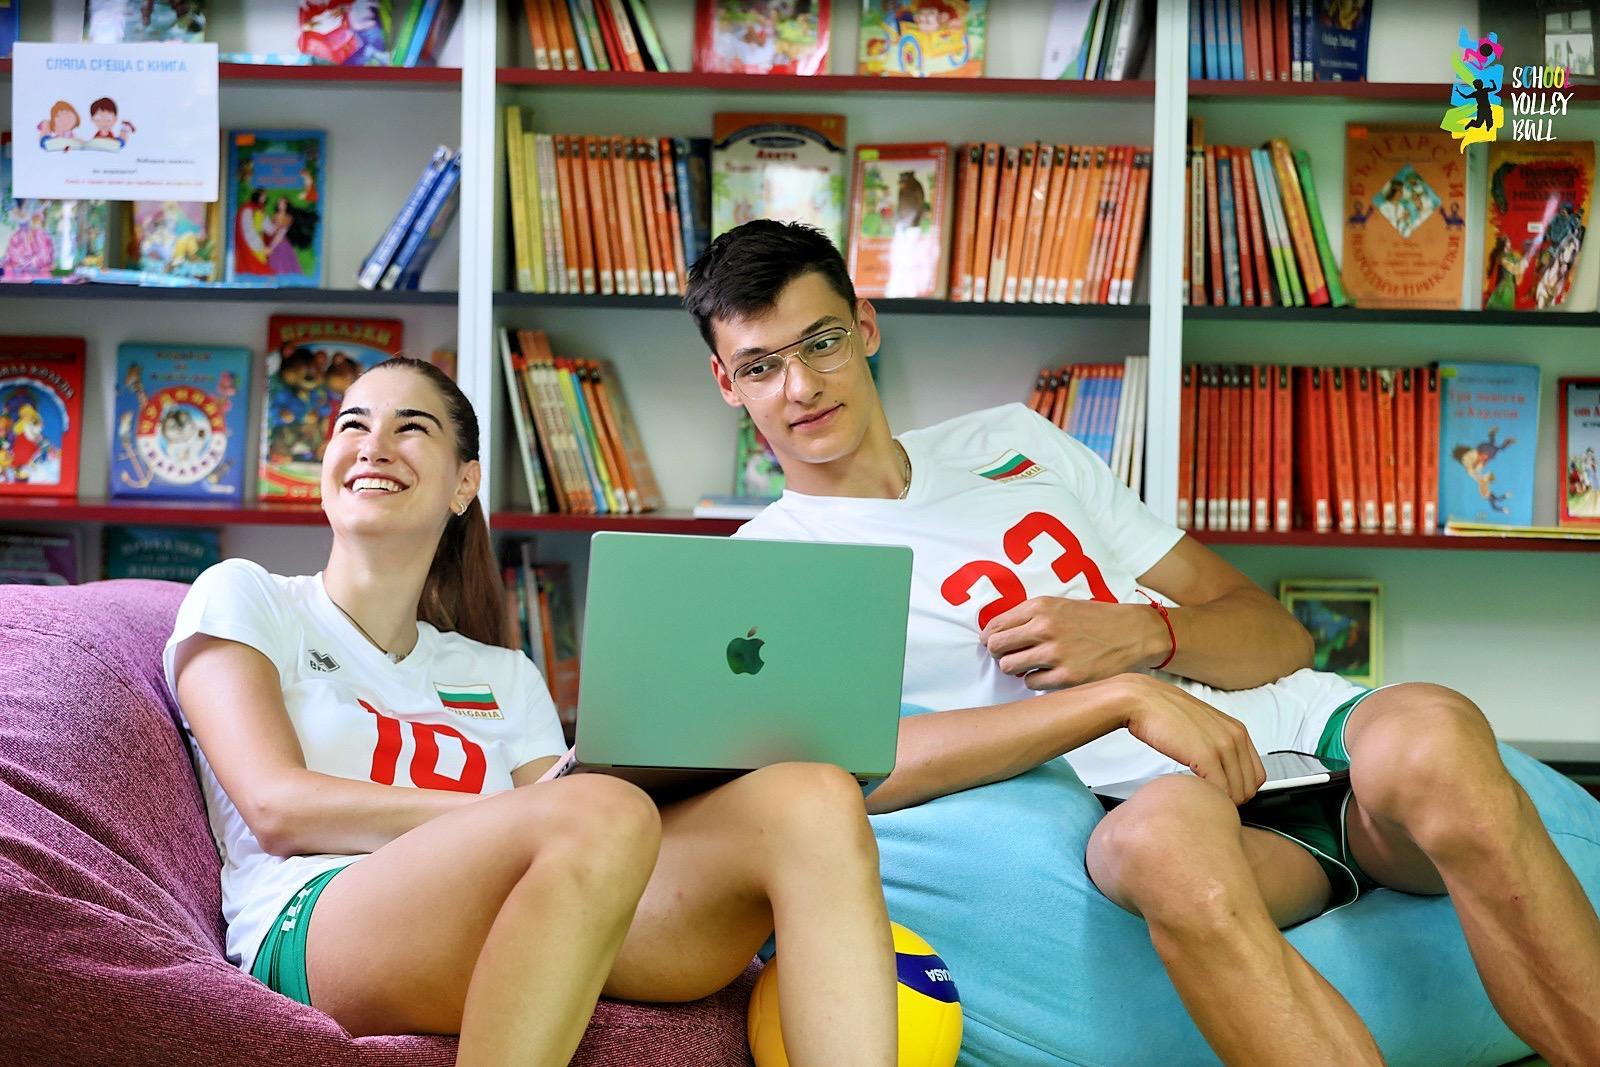 Алекс Николов и Никол Данкинова станаха посланици на "С волейбол на училище